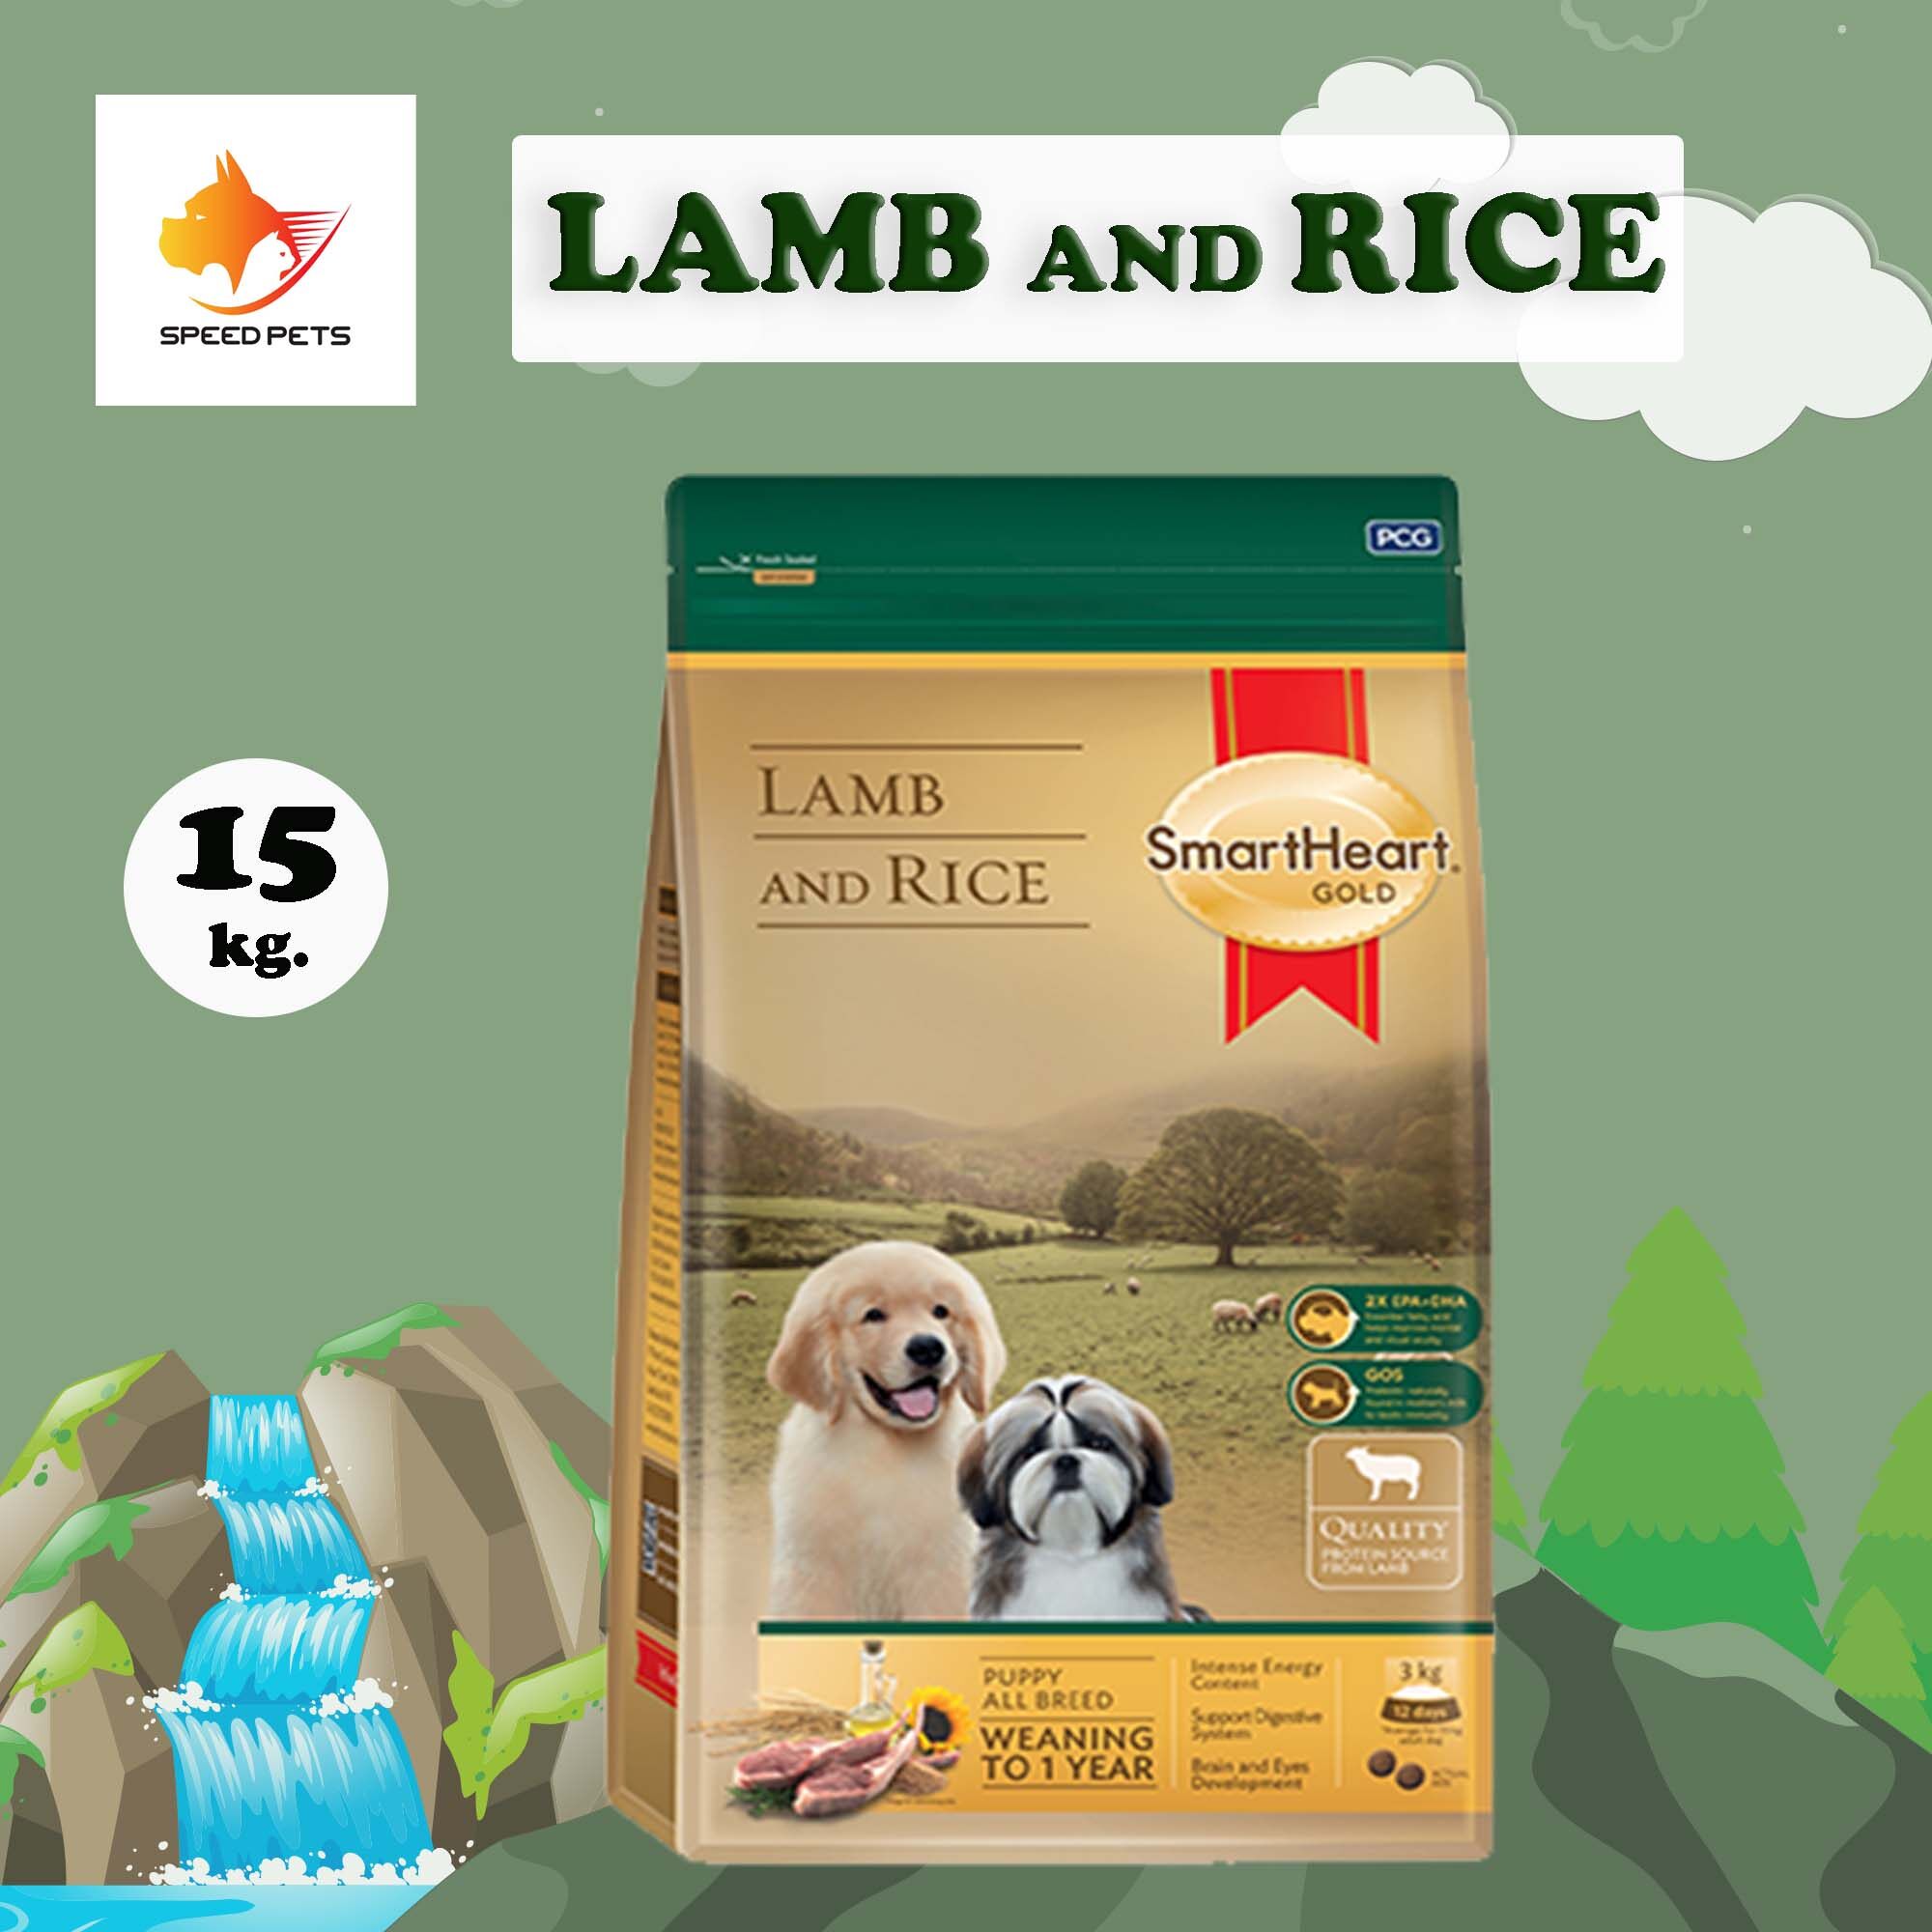 Smartheart Gold Puppy Lamb Rice 15kg อาหารสุนัข อาหารลูกสุนัข อาหารเม็ดสุนัข แกะ ข้าว ขนาด 15 กก